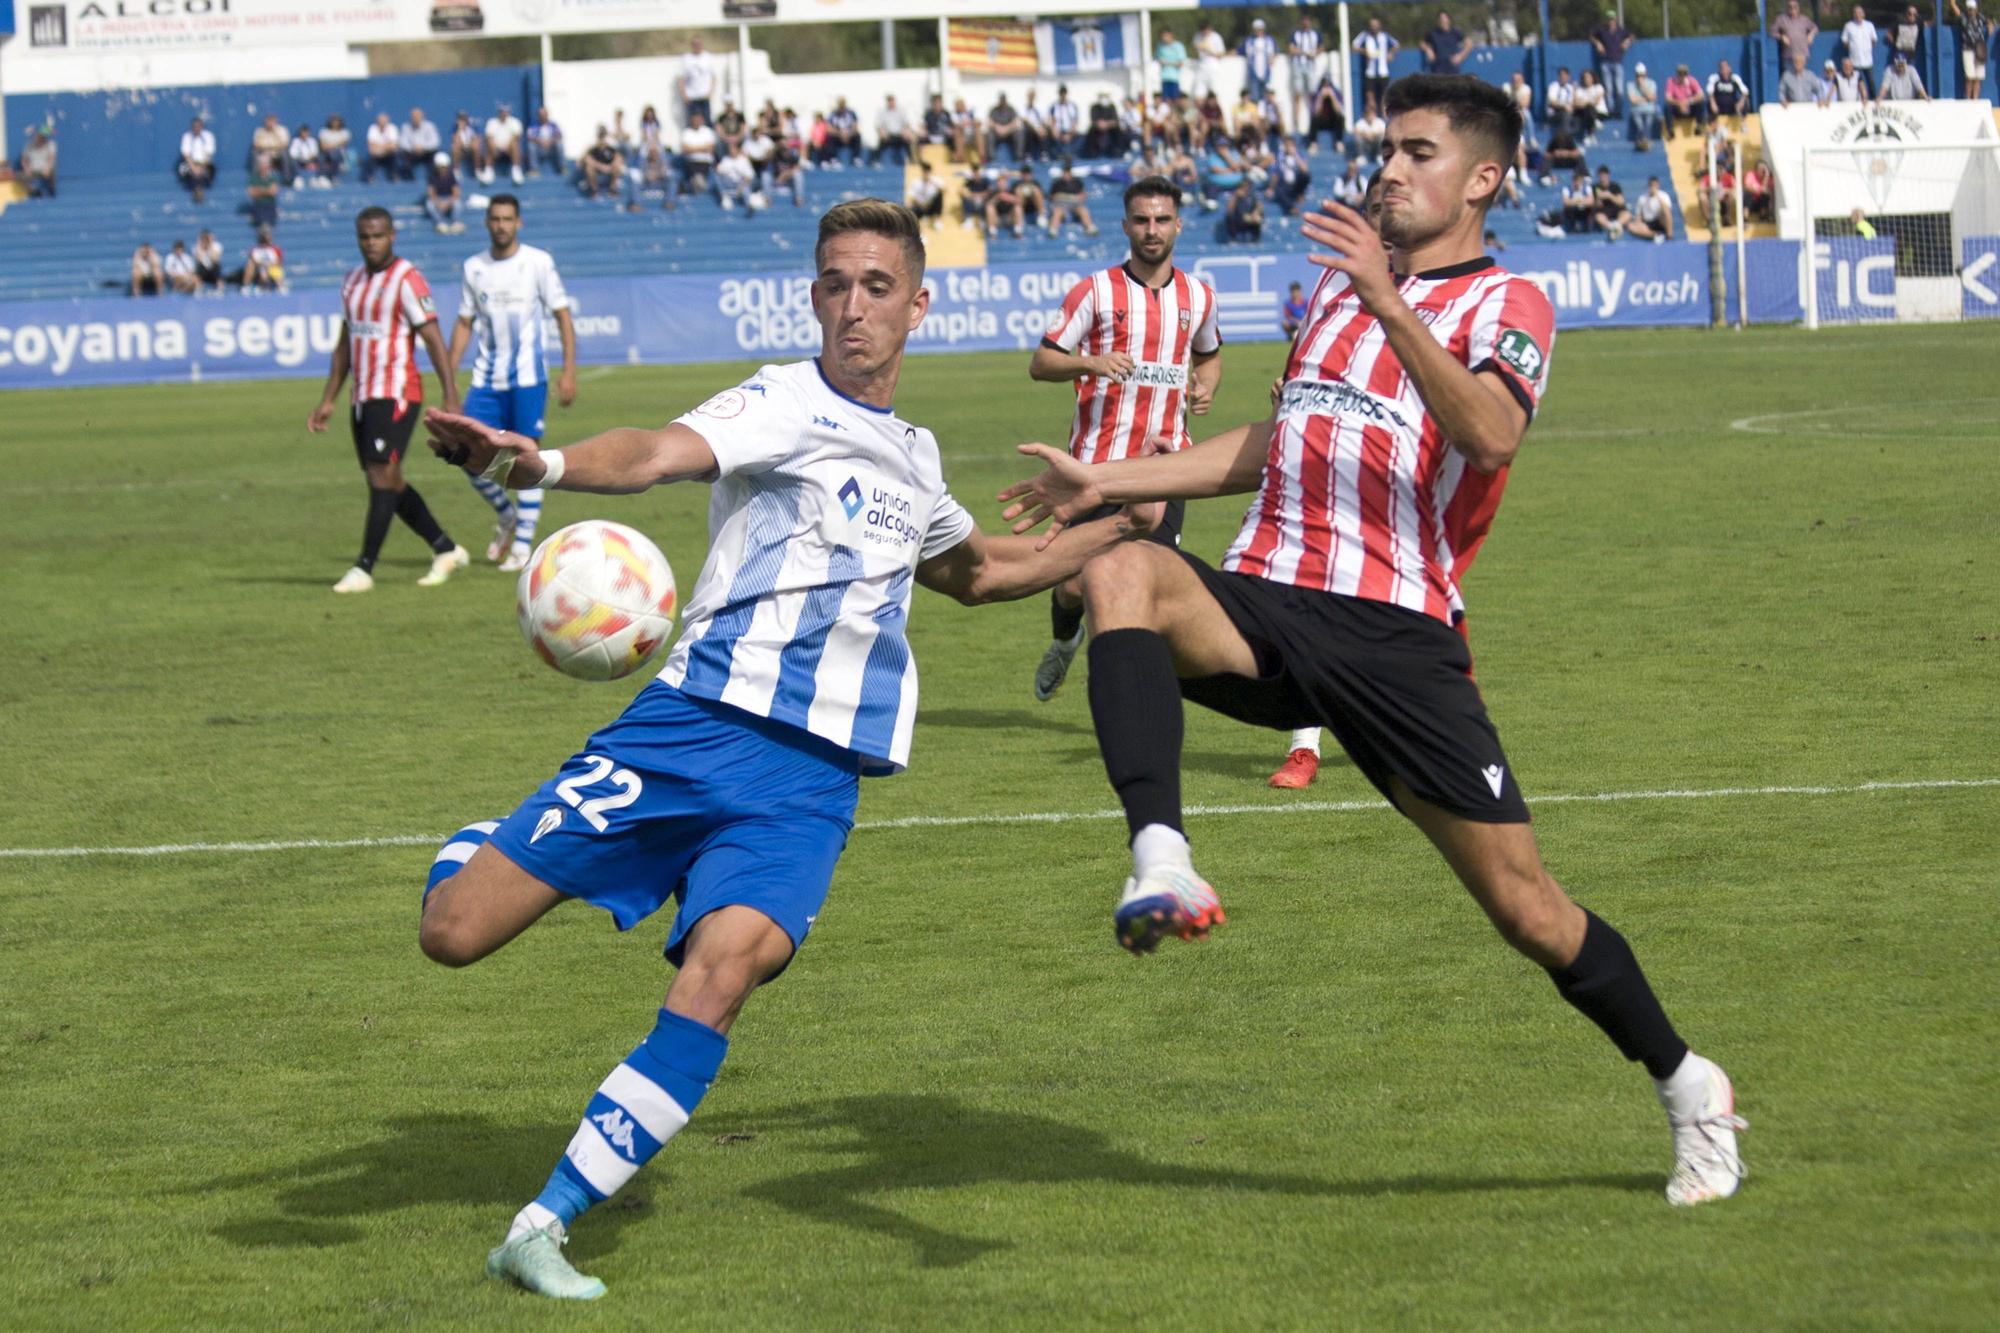 La UD Logroñes se impone al Alcoyano (0-1)